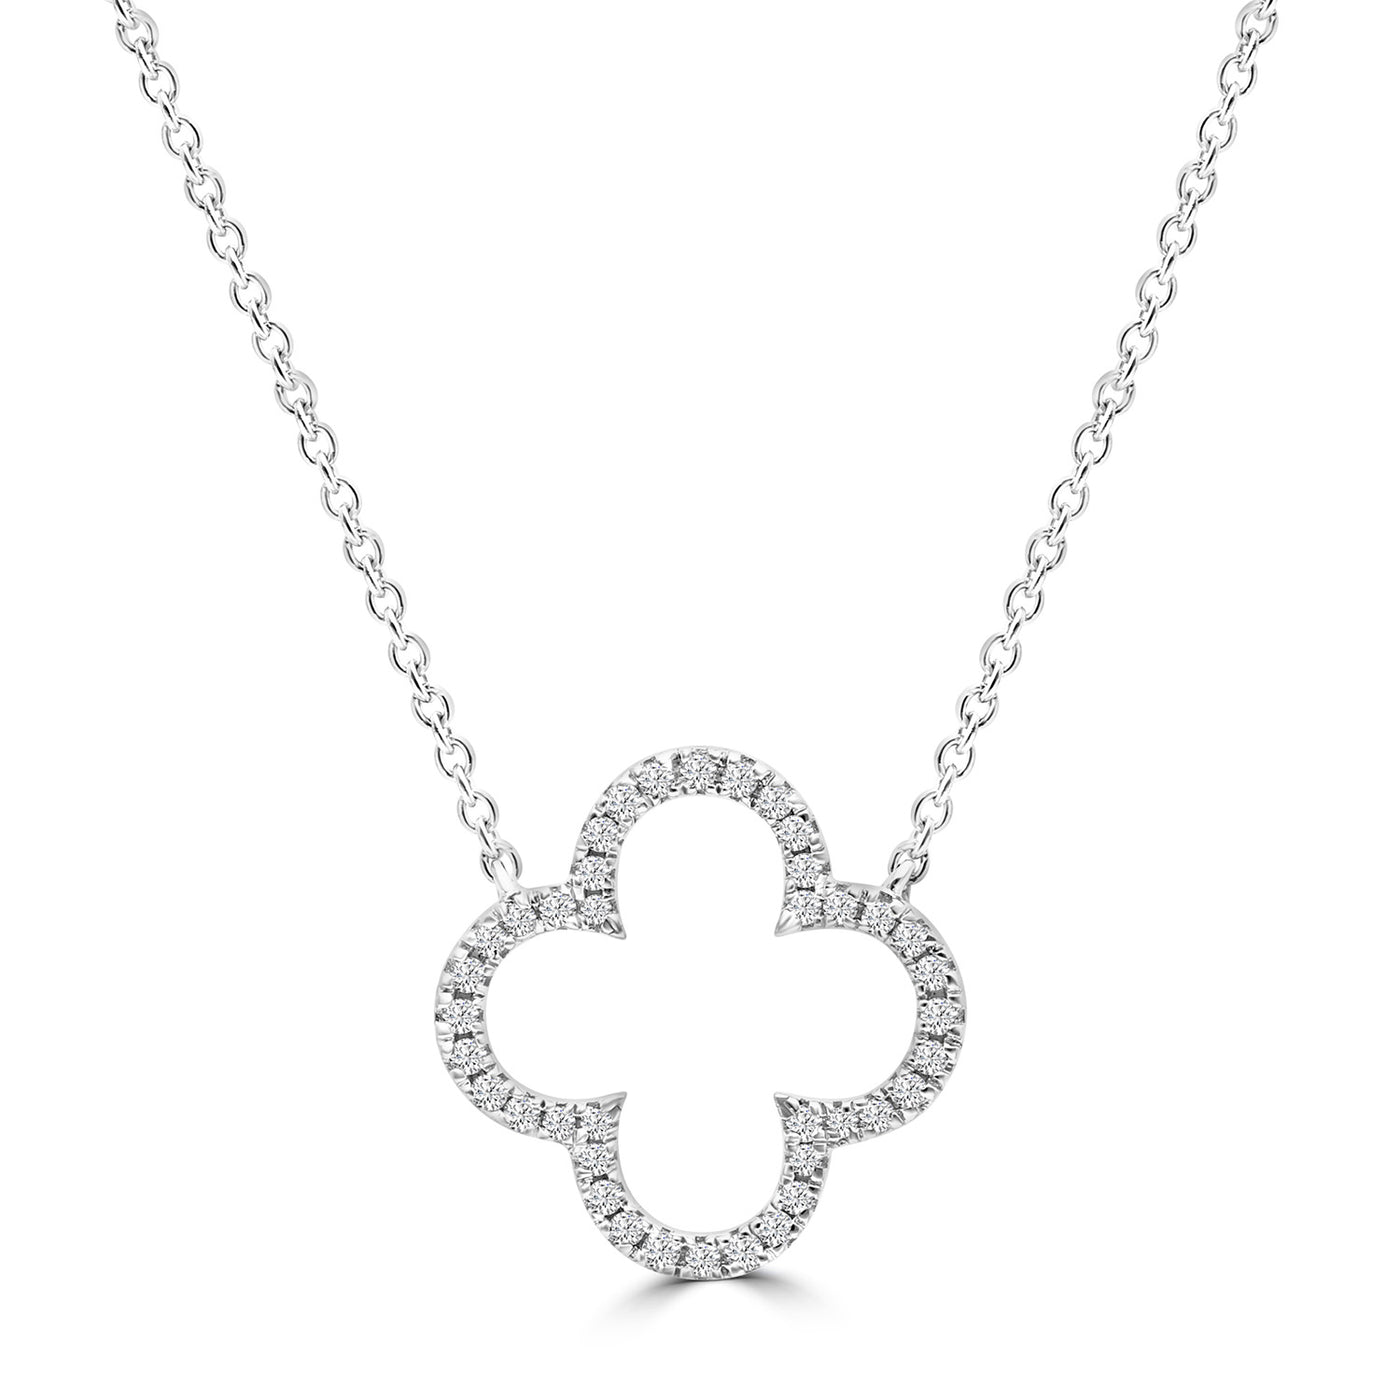 9ct White Gold Diamond Clover Necklace.